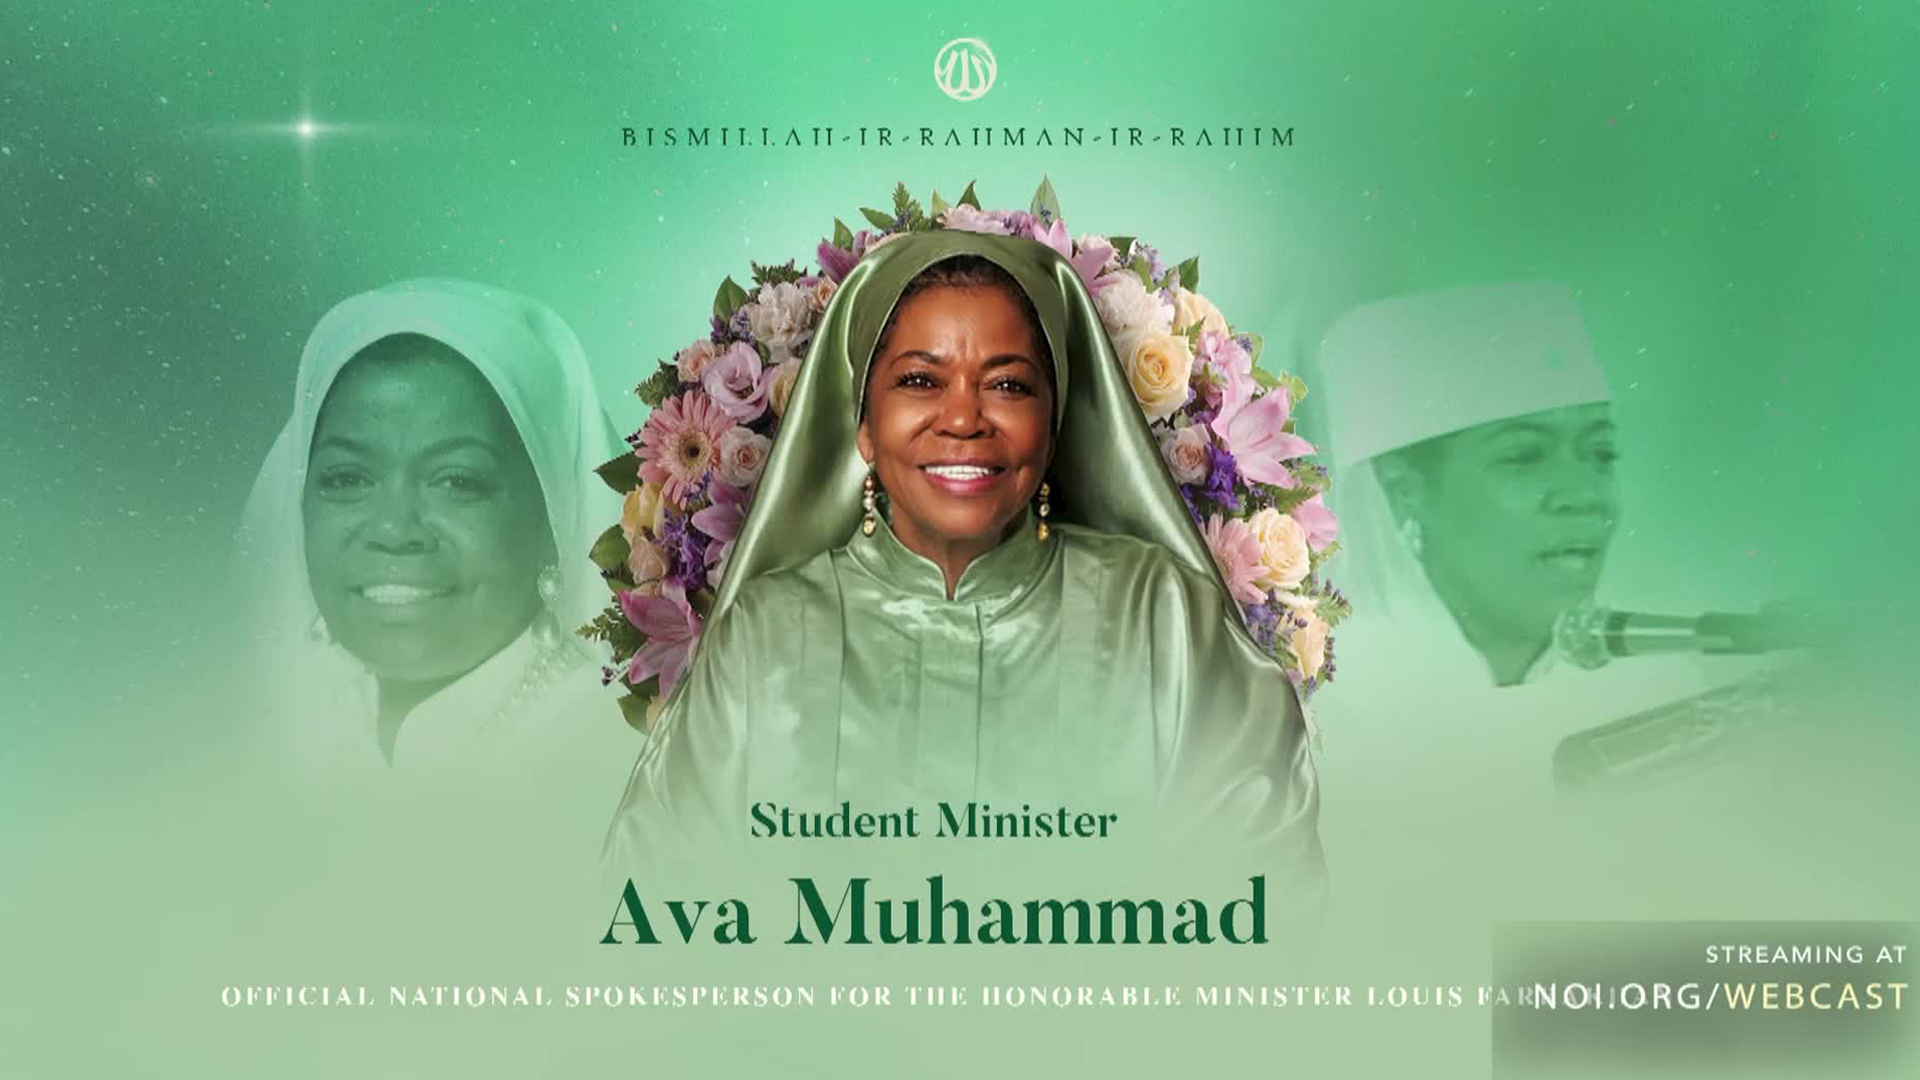 Janazah Services For Student Minister Ava Muhammad